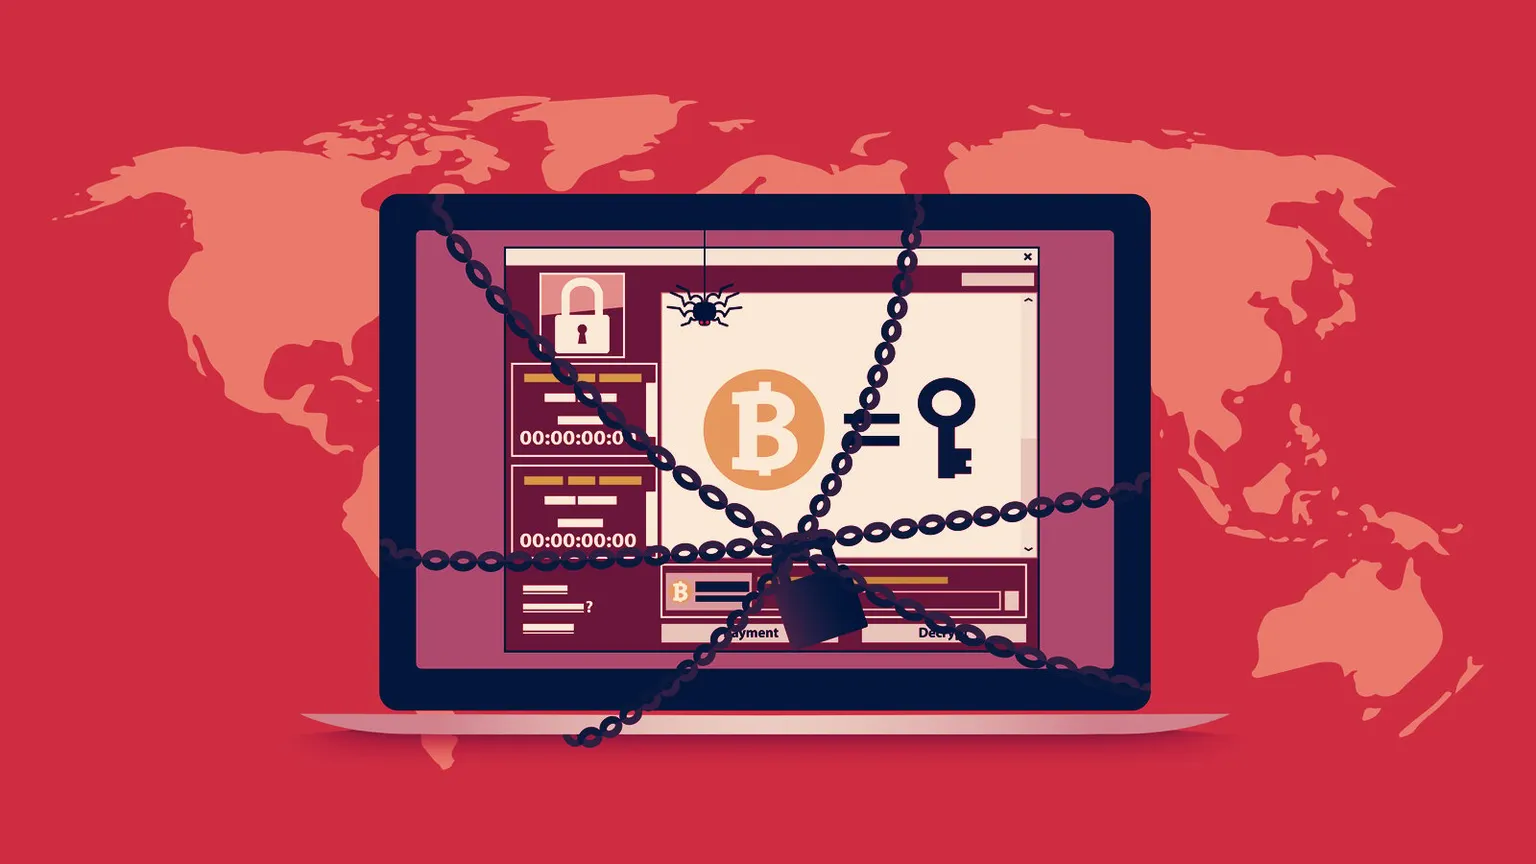 Hackers demanding Bitcoin as ransom. Image: Shutterstock 